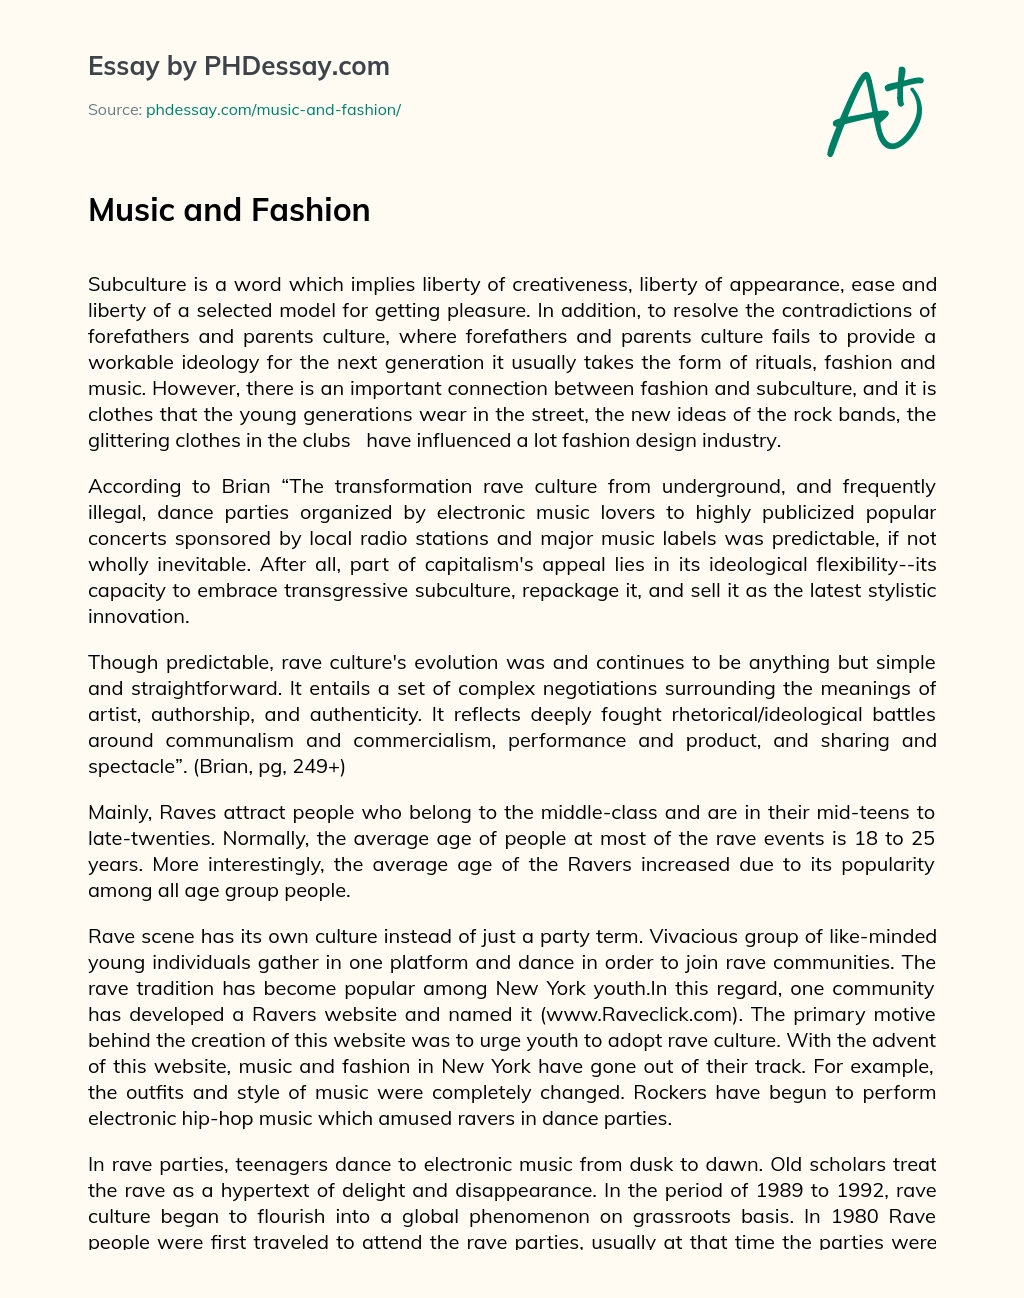 Music and Fashion essay